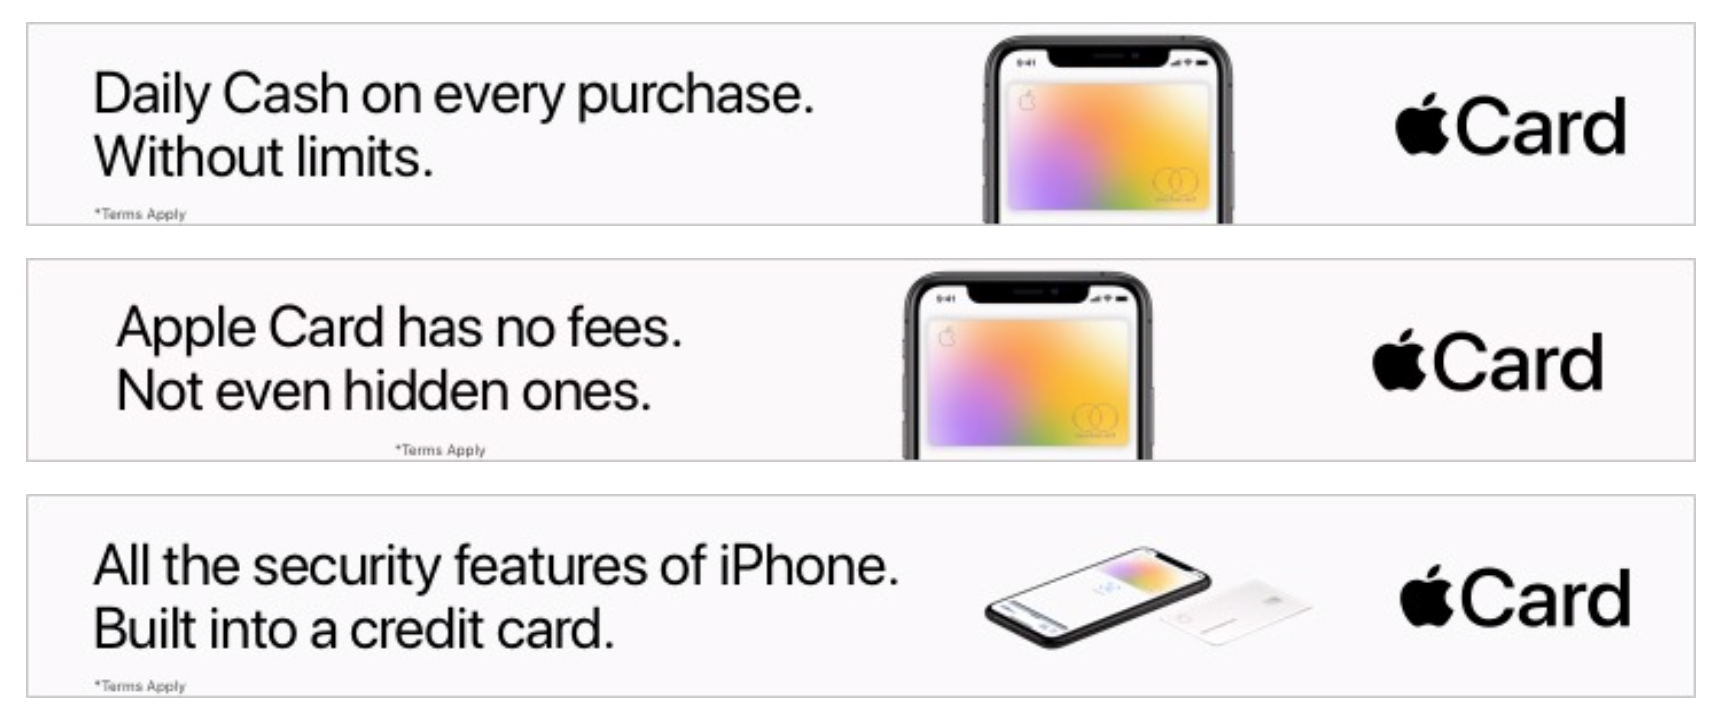 Apple Bucks Credit Card Marketing Best Practices | DeviceDaily.com